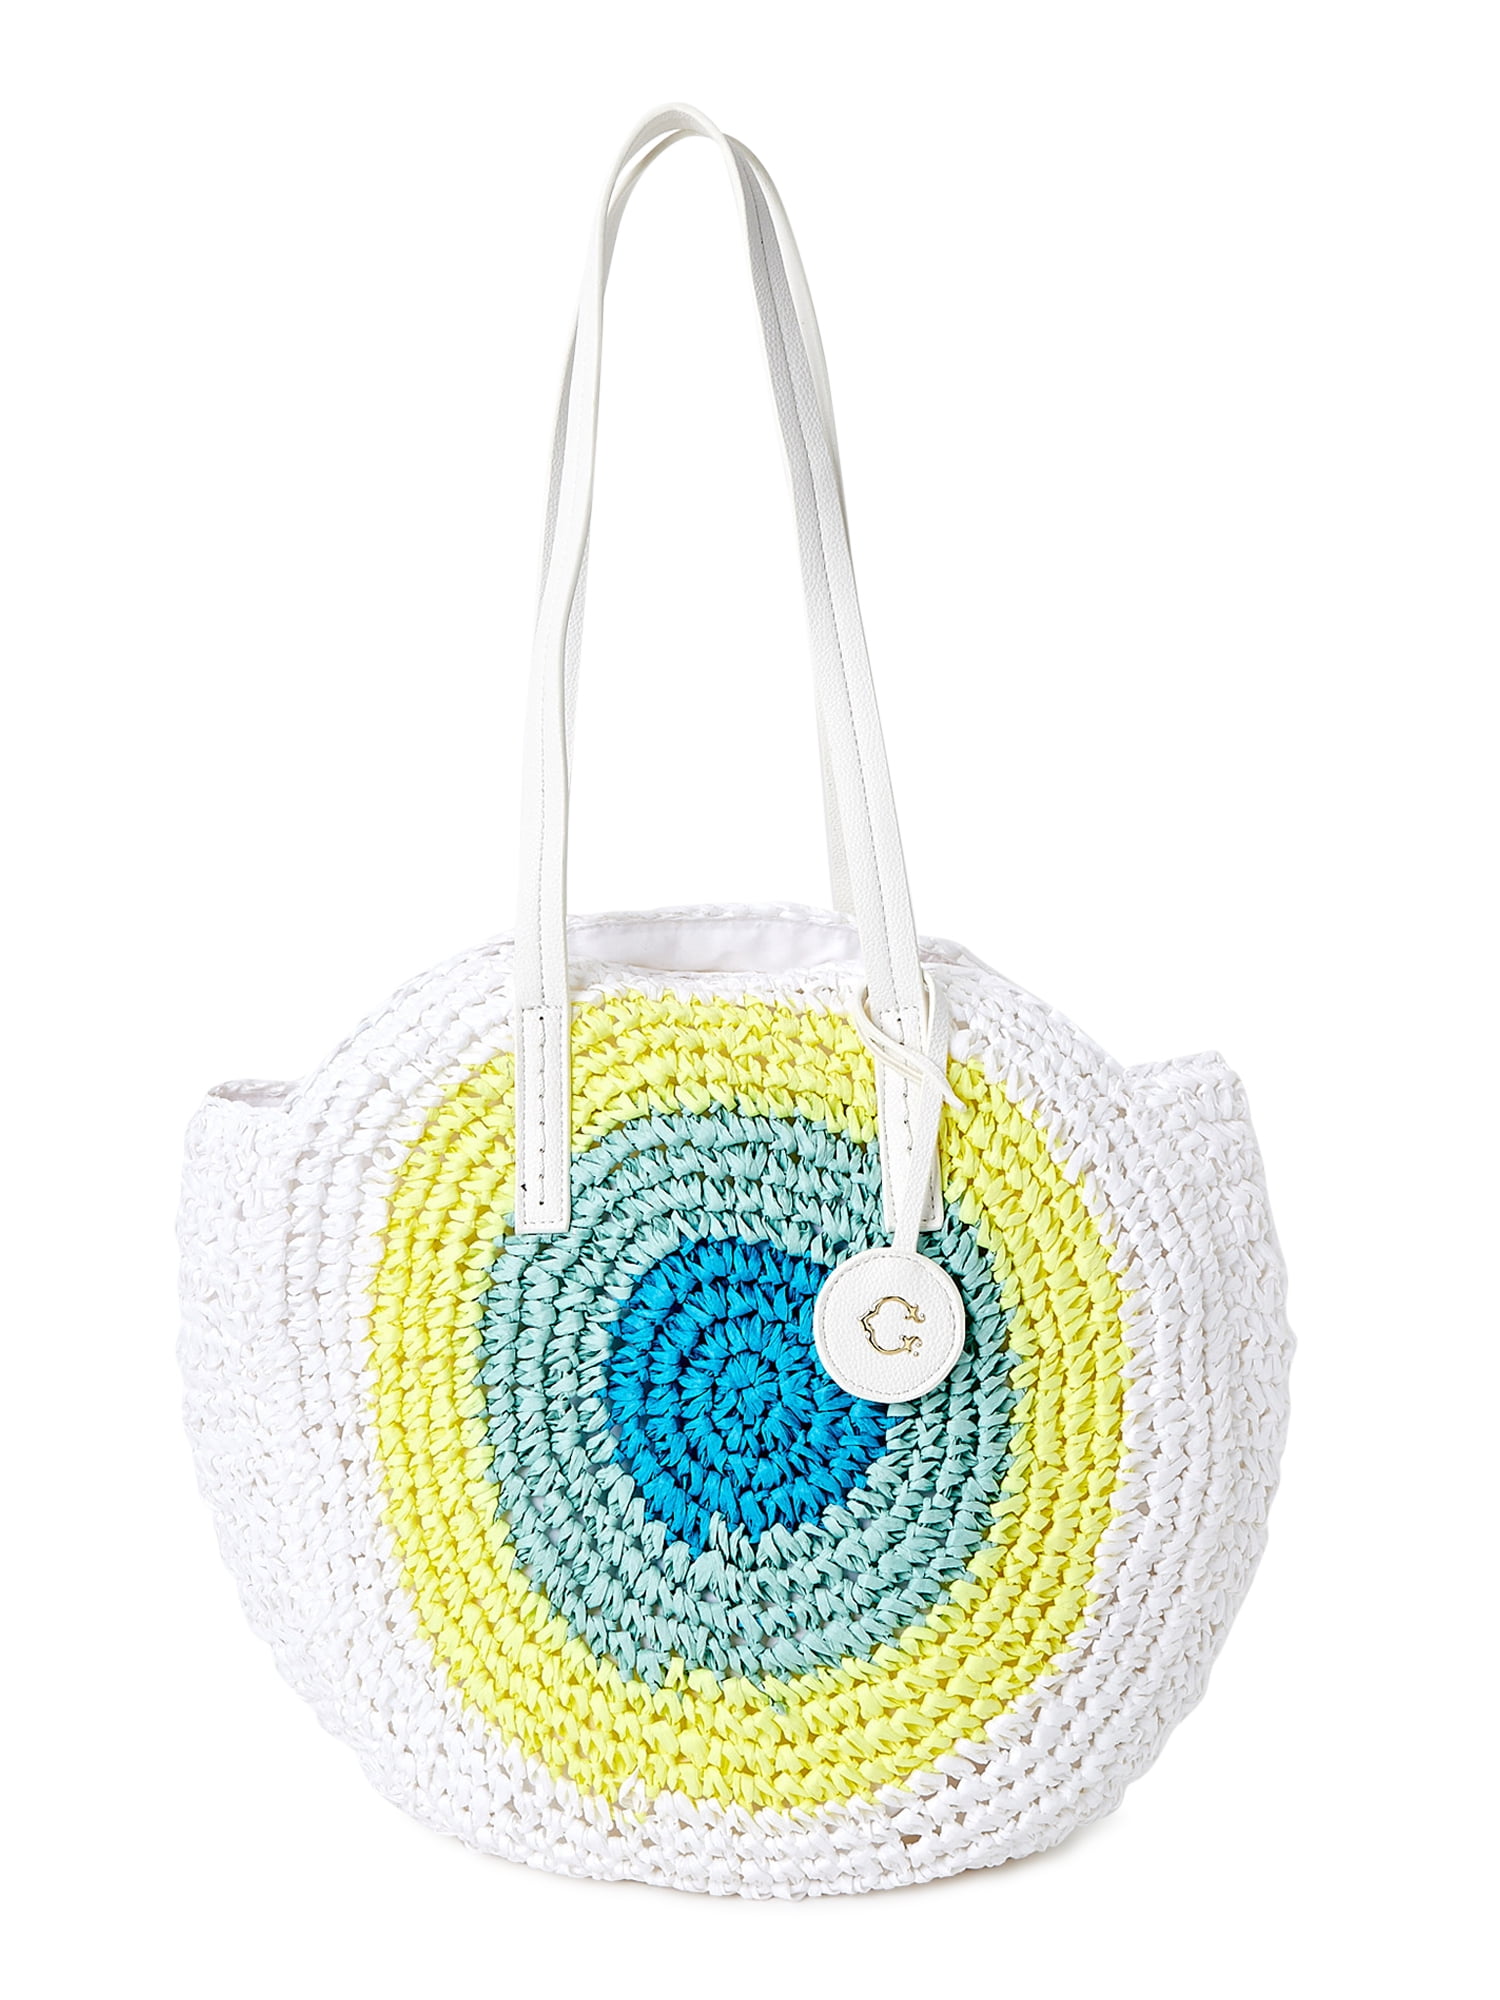 Beige handbag and white application Crochet bag Women's bag Handmade Made in Italy Women's accessory